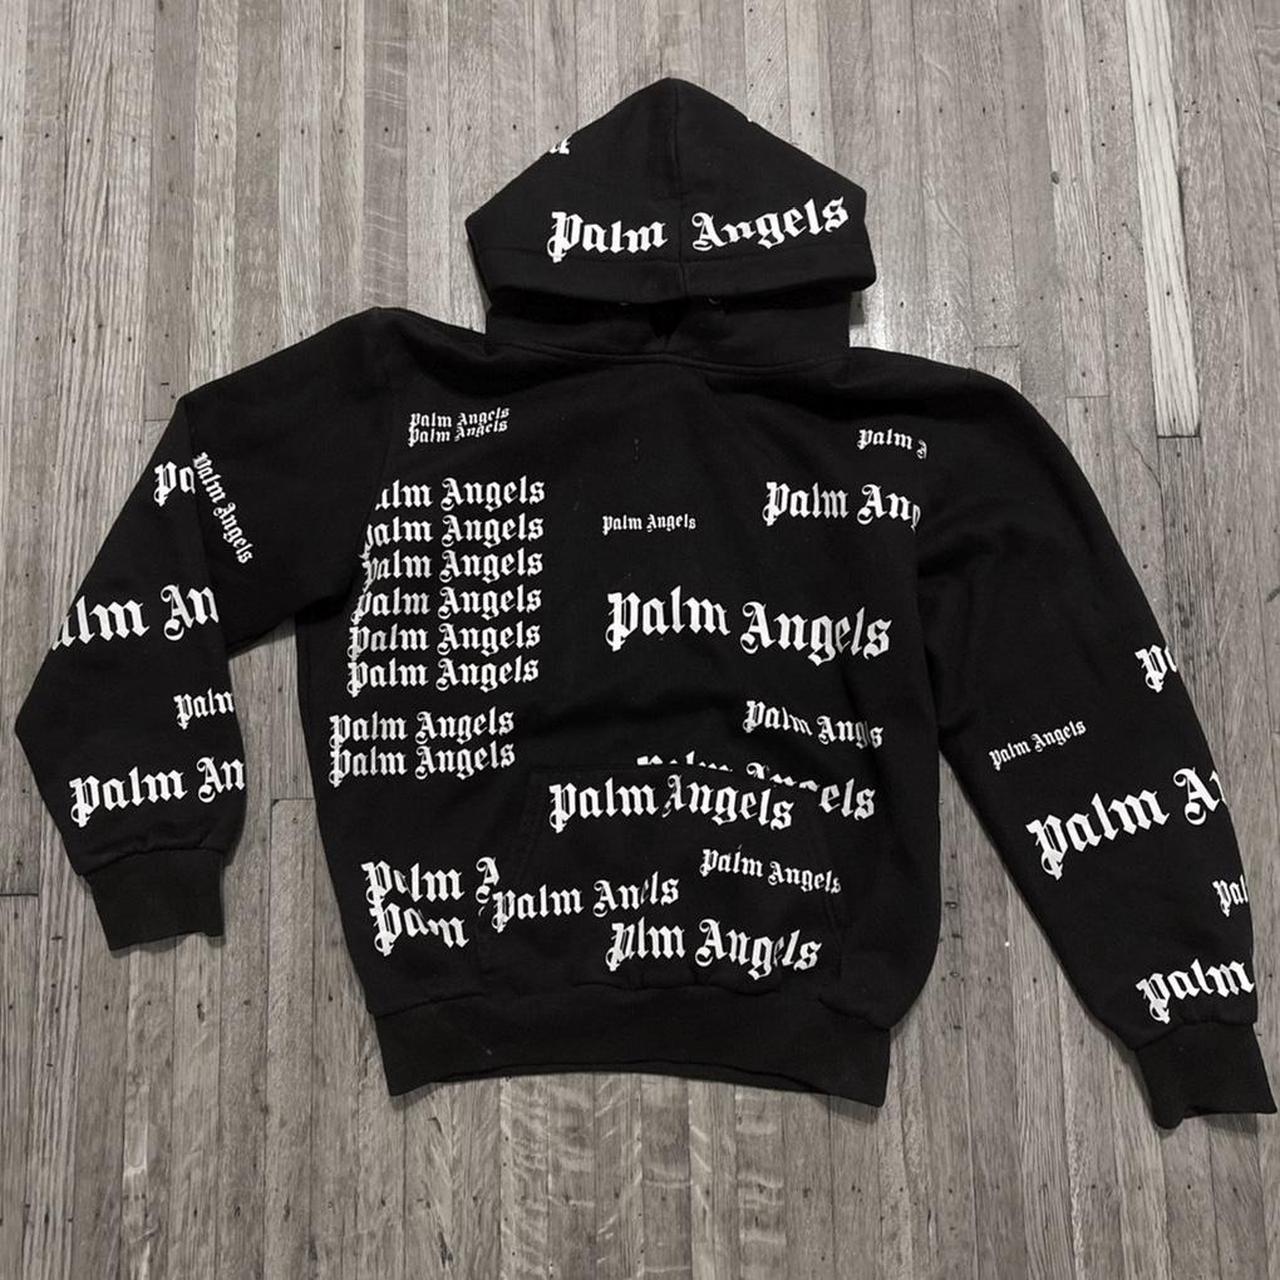 palm angels hoodie womens size L - Depop